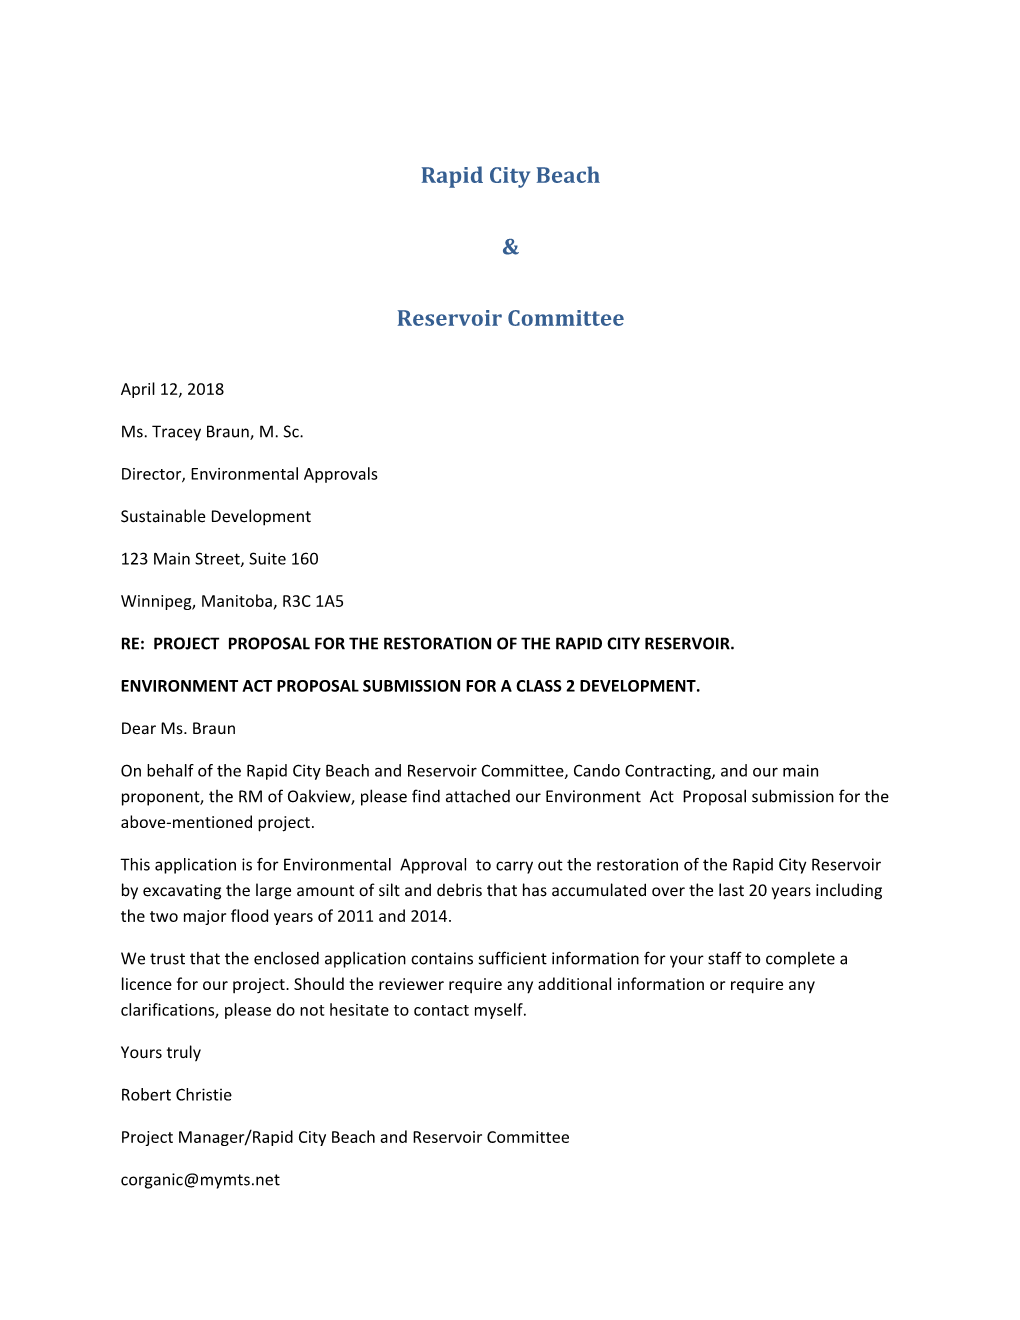 Rapid City Beach & Reservoir Committee